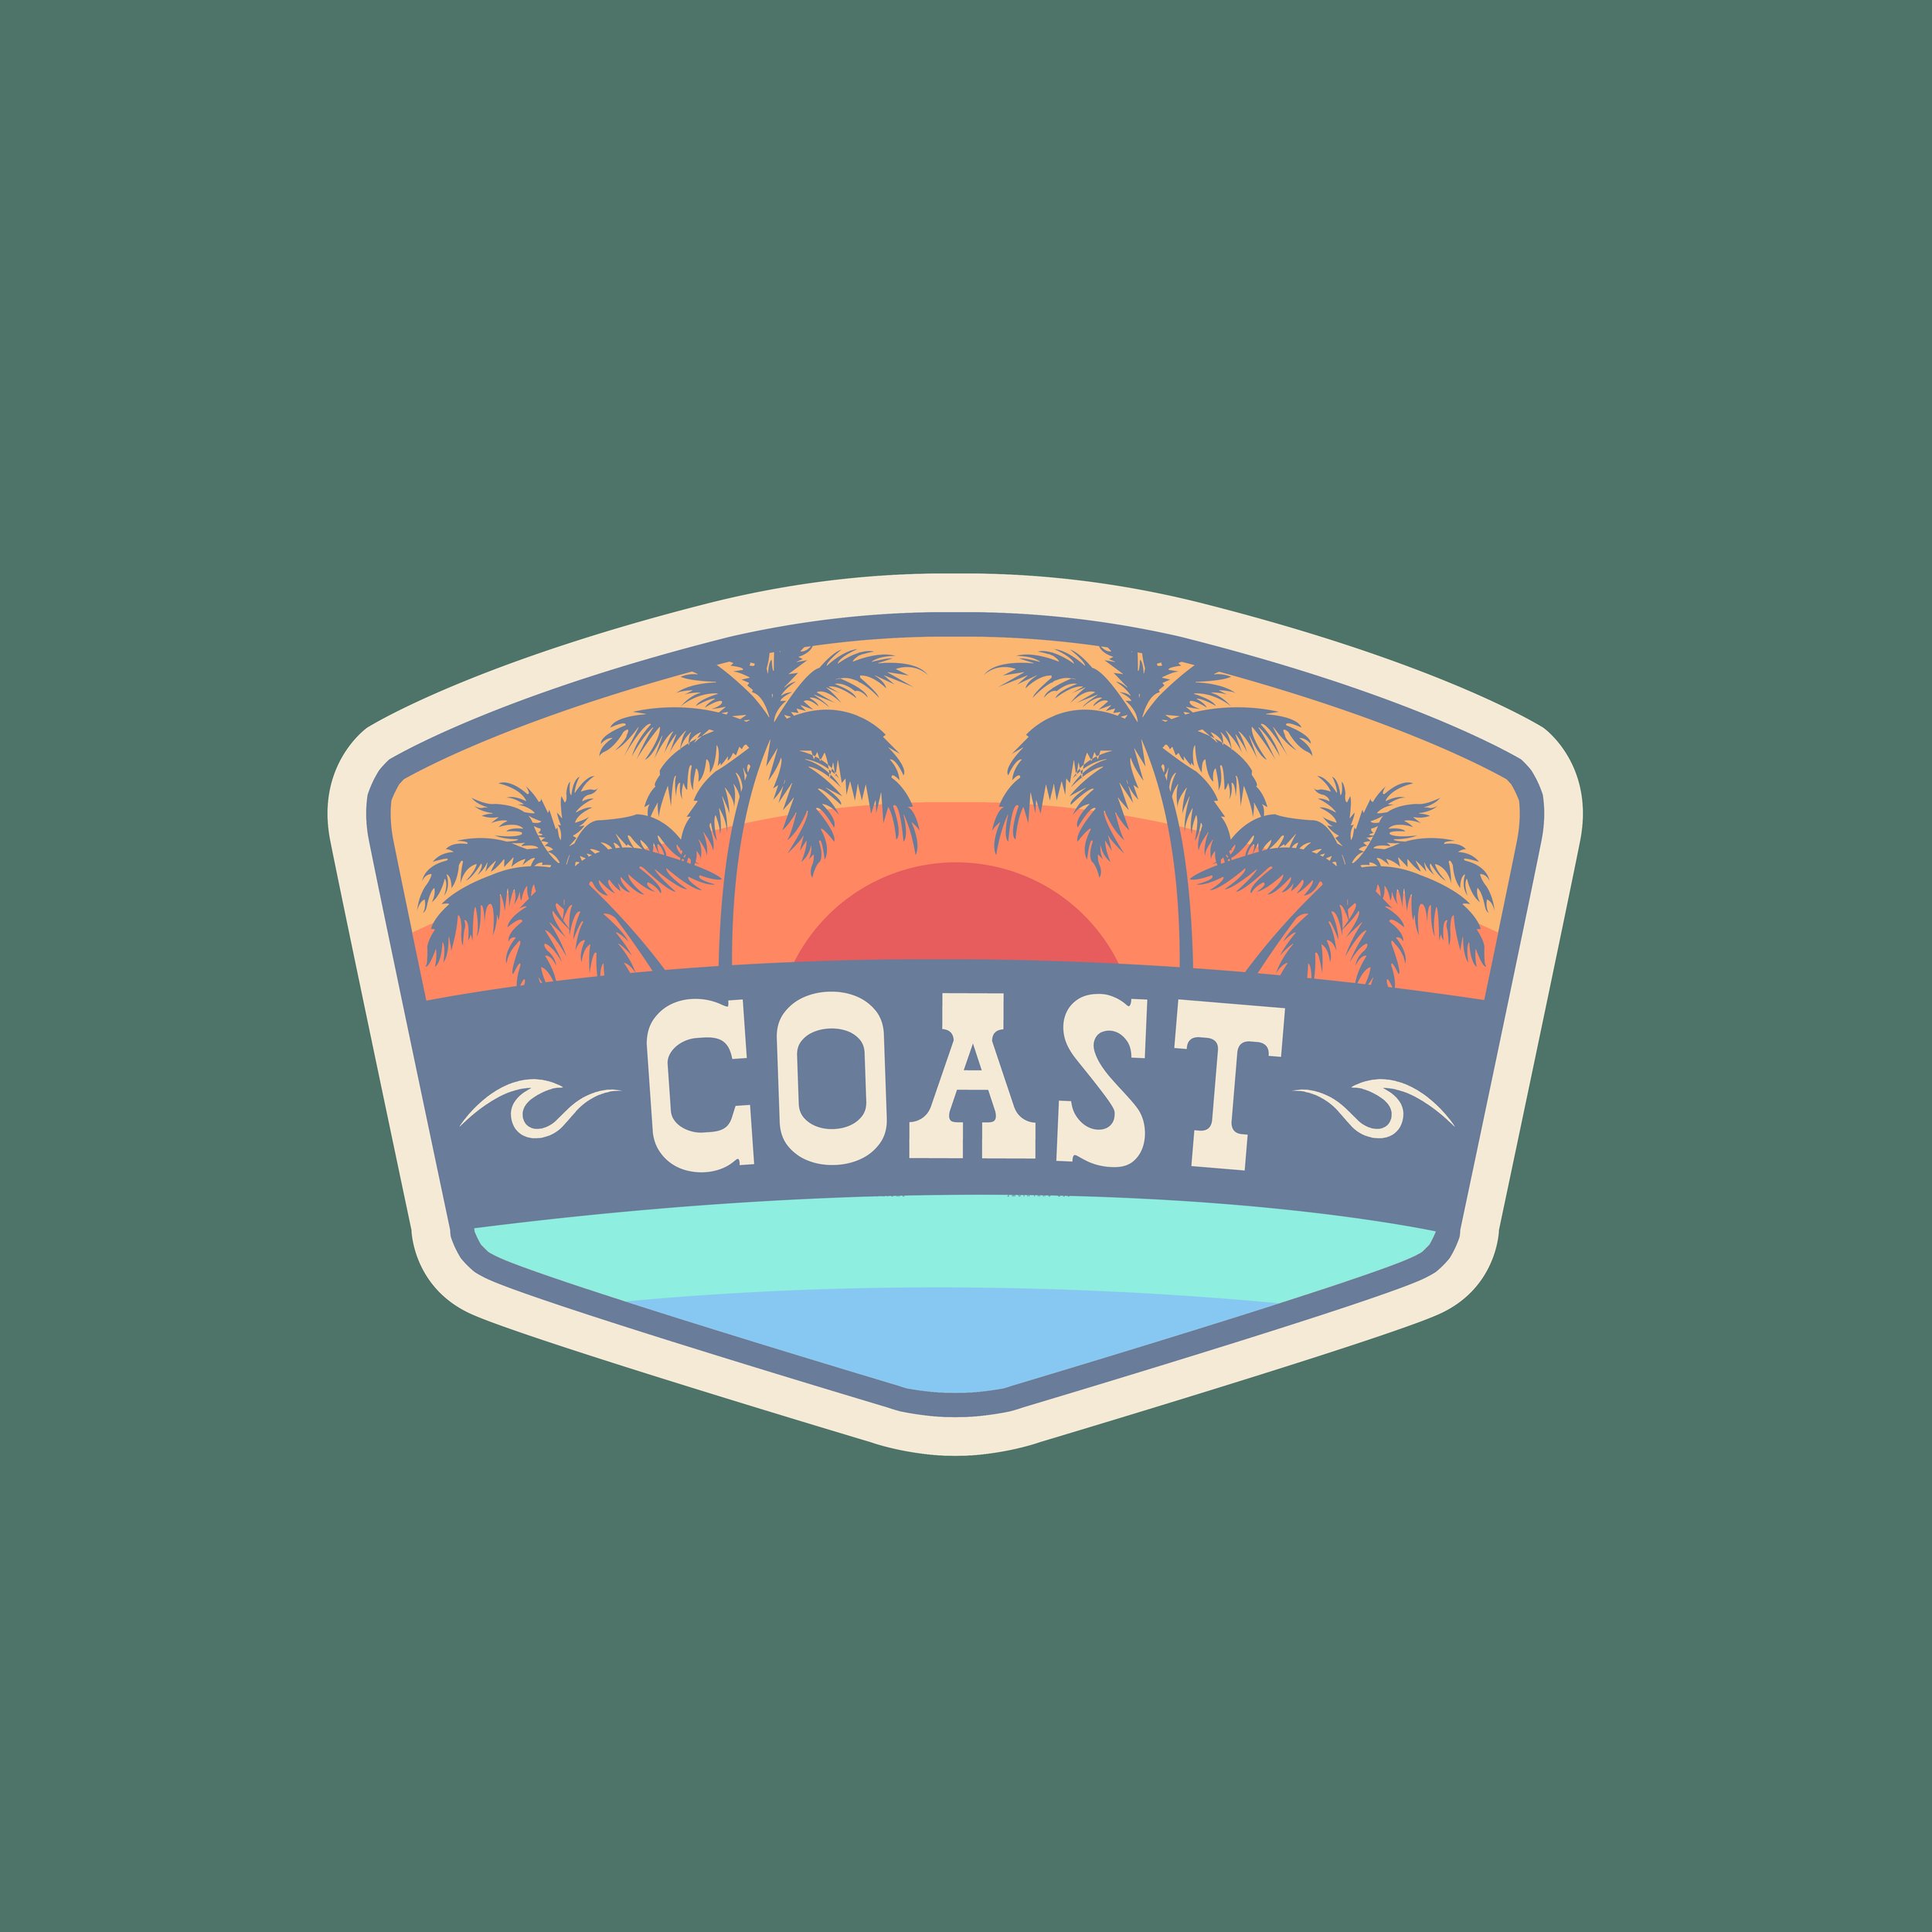 Coast_Palm Badge copy.jpg